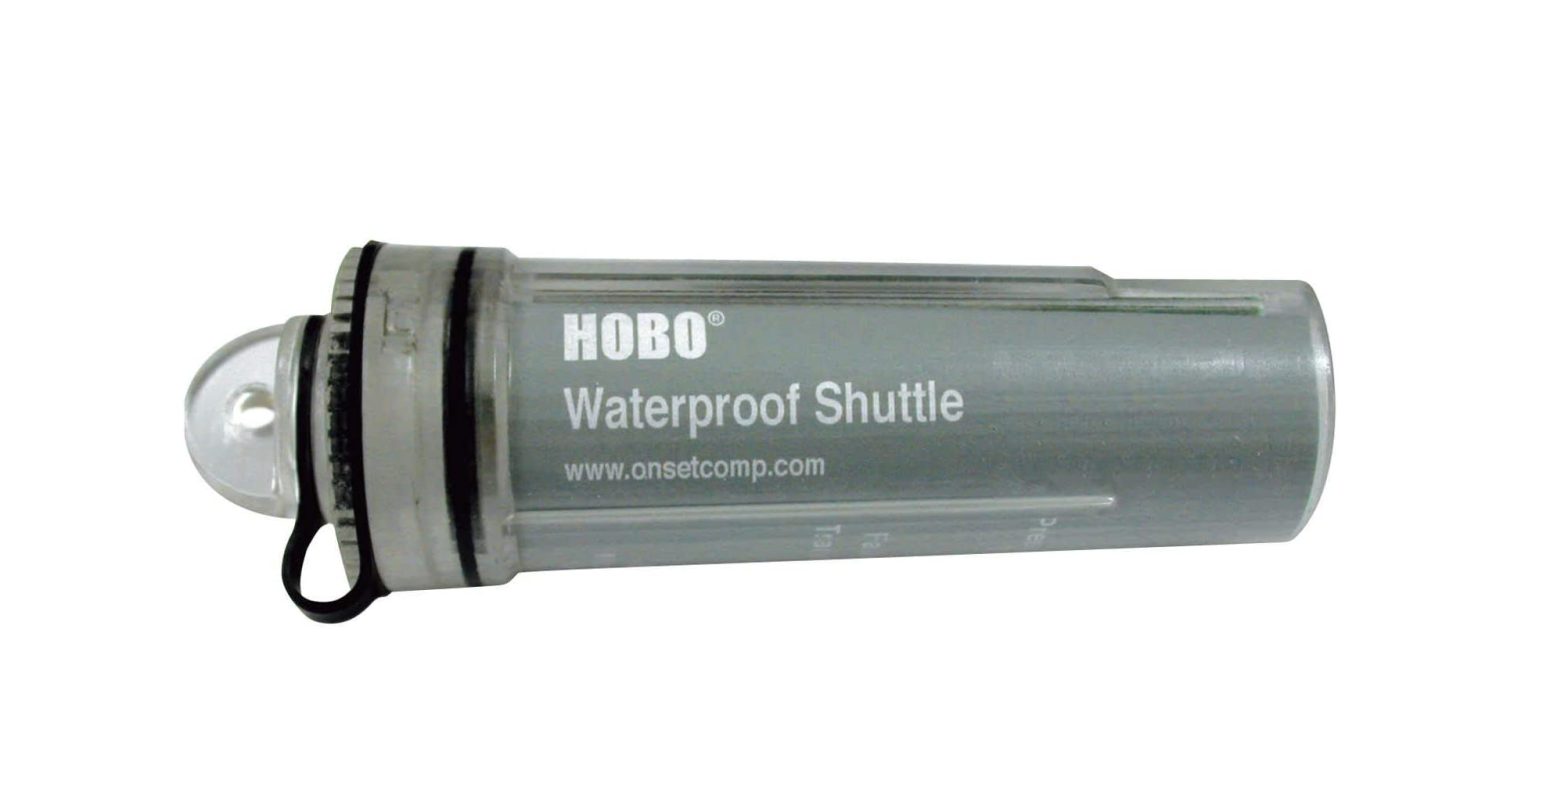 ONSET U-DTW-1 HOBO Waterproof Shuttle User Manual